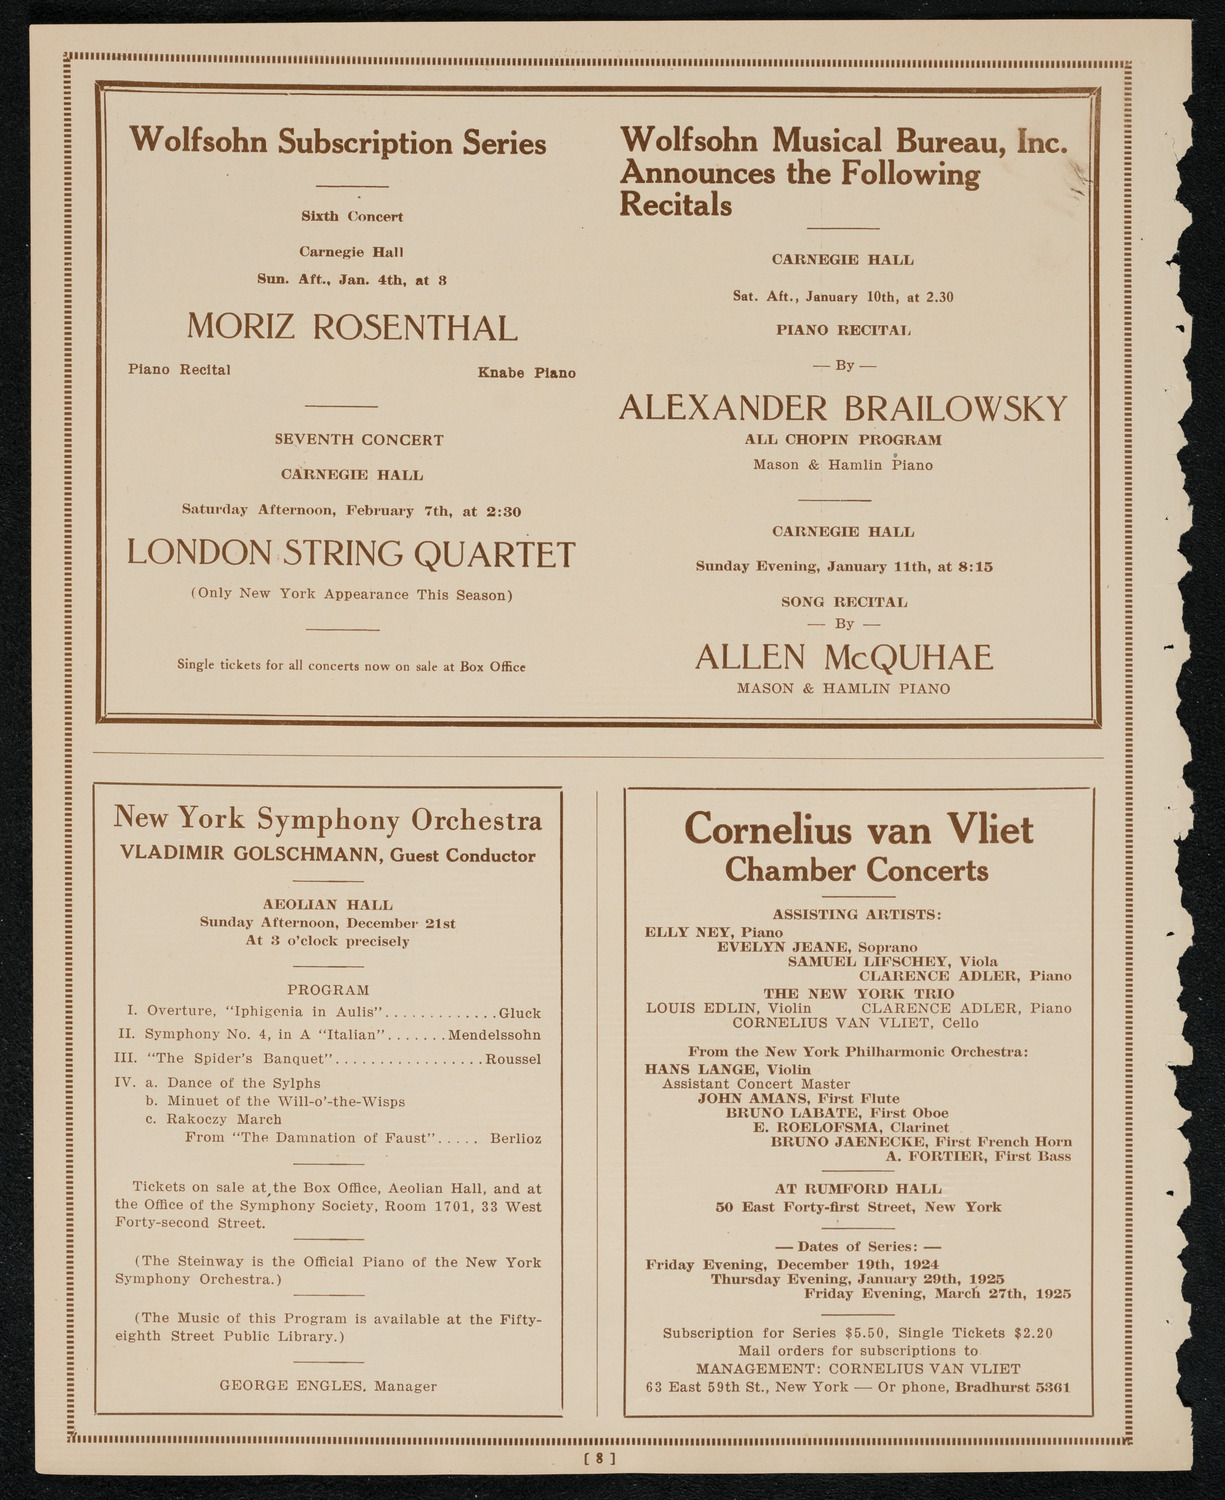 State Symphony Orchestra of New York, December 16, 1924, program page 8